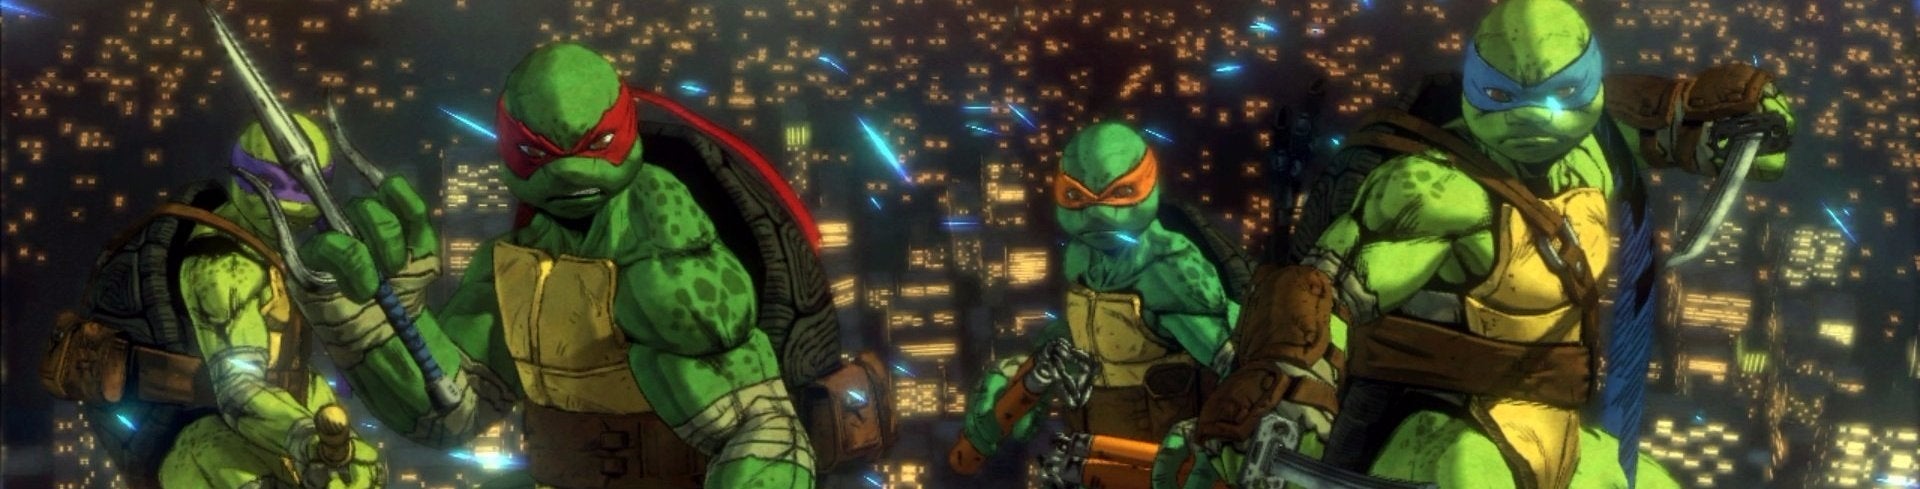 Image for Teenage Mutant Ninja Turtles: Mutants in Manhattan review